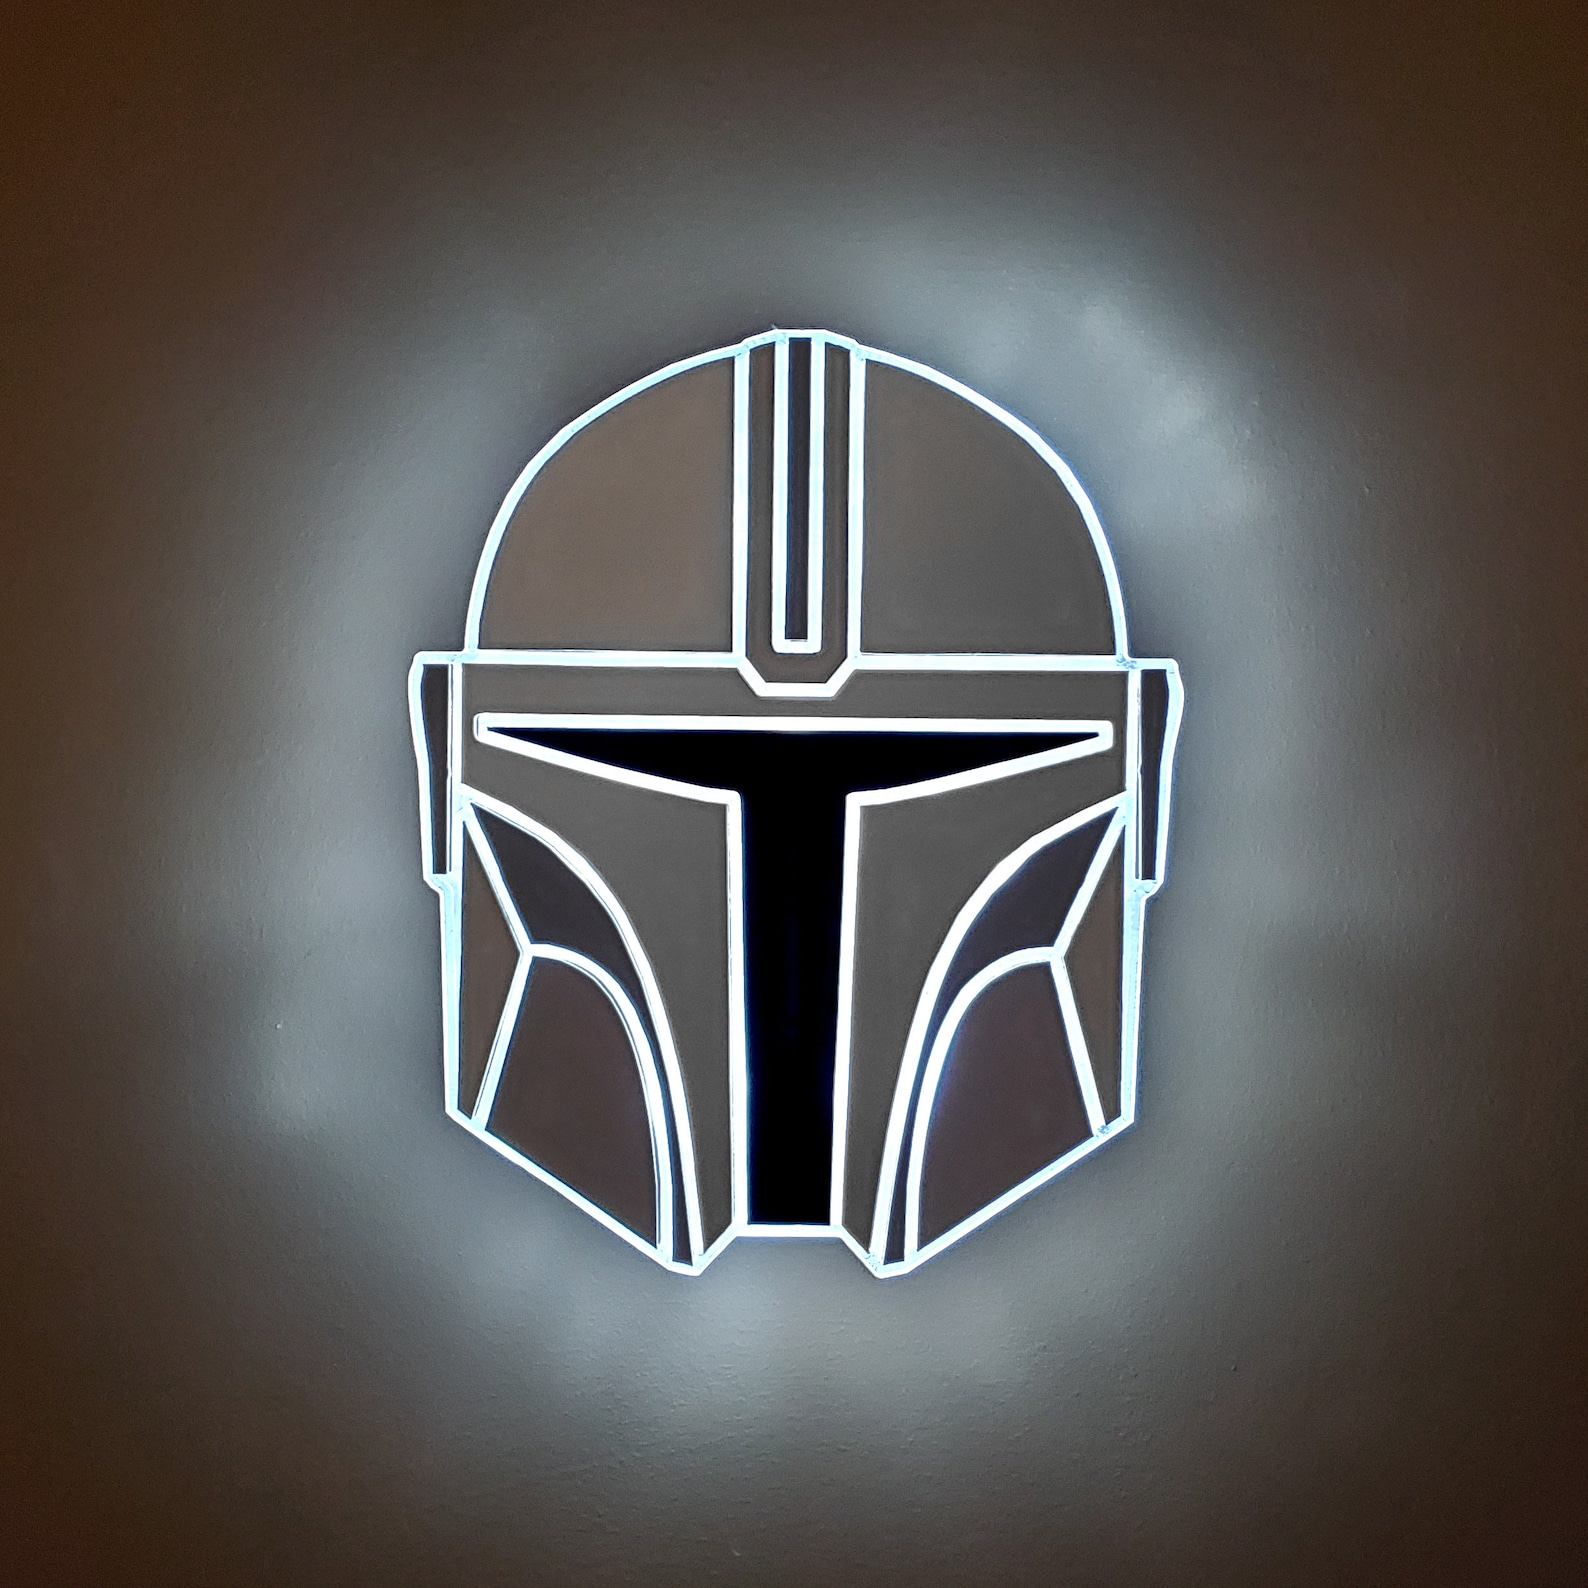 TM Mando's (Din Djarin's) Helmet Neon LED Light Wall Decor Sign 2